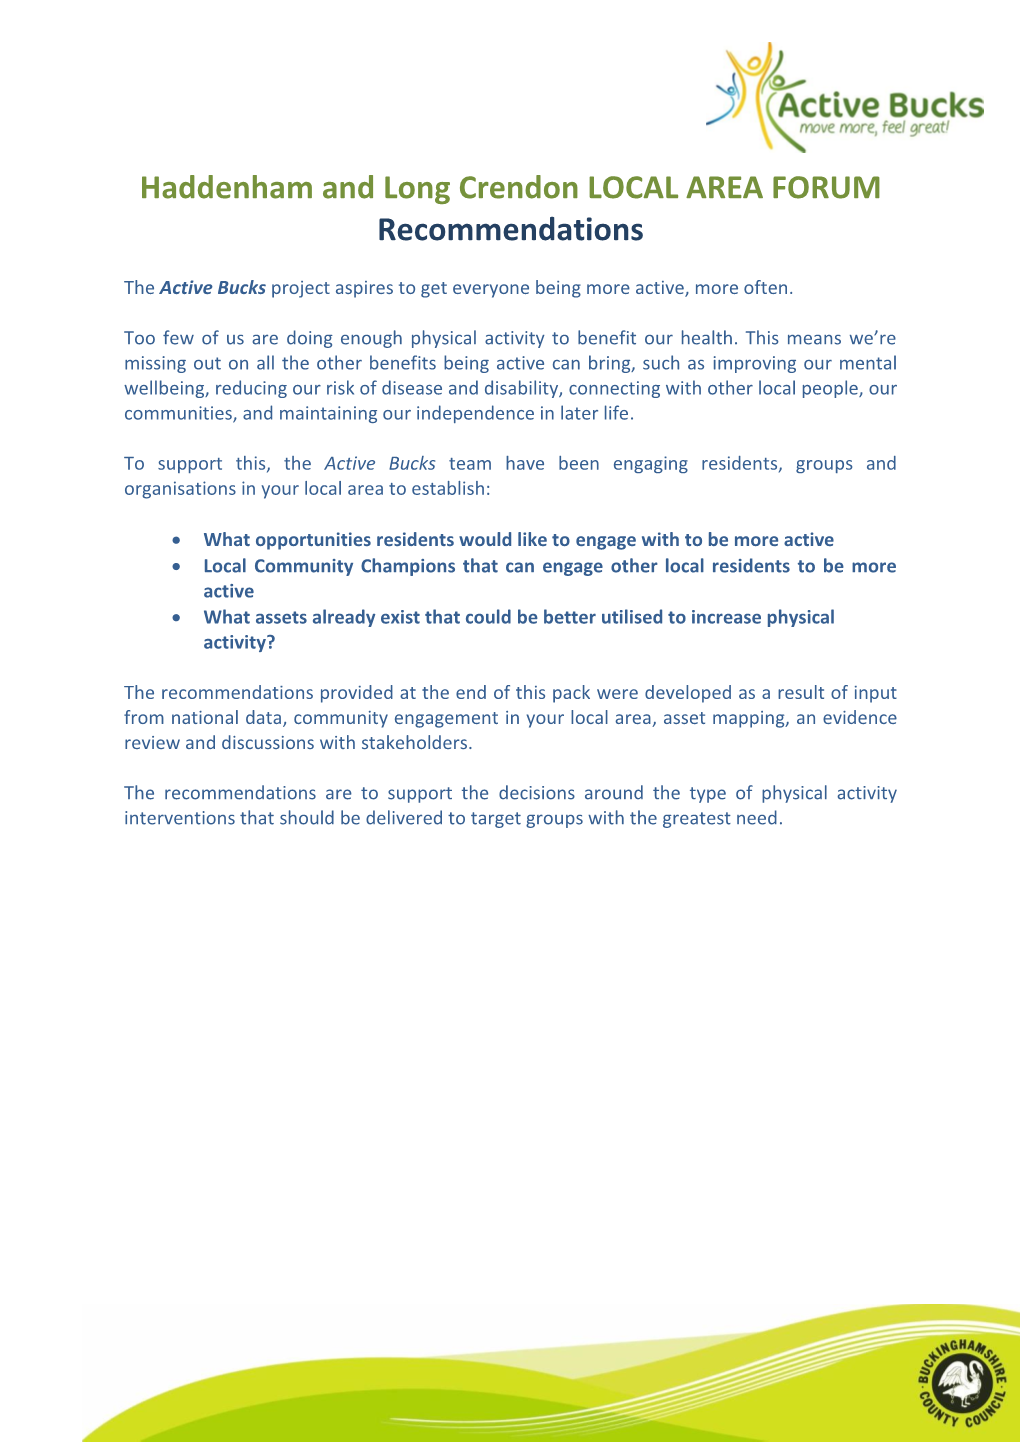 Haddenham and Long Crendon LOCAL AREA FORUM Recommendations